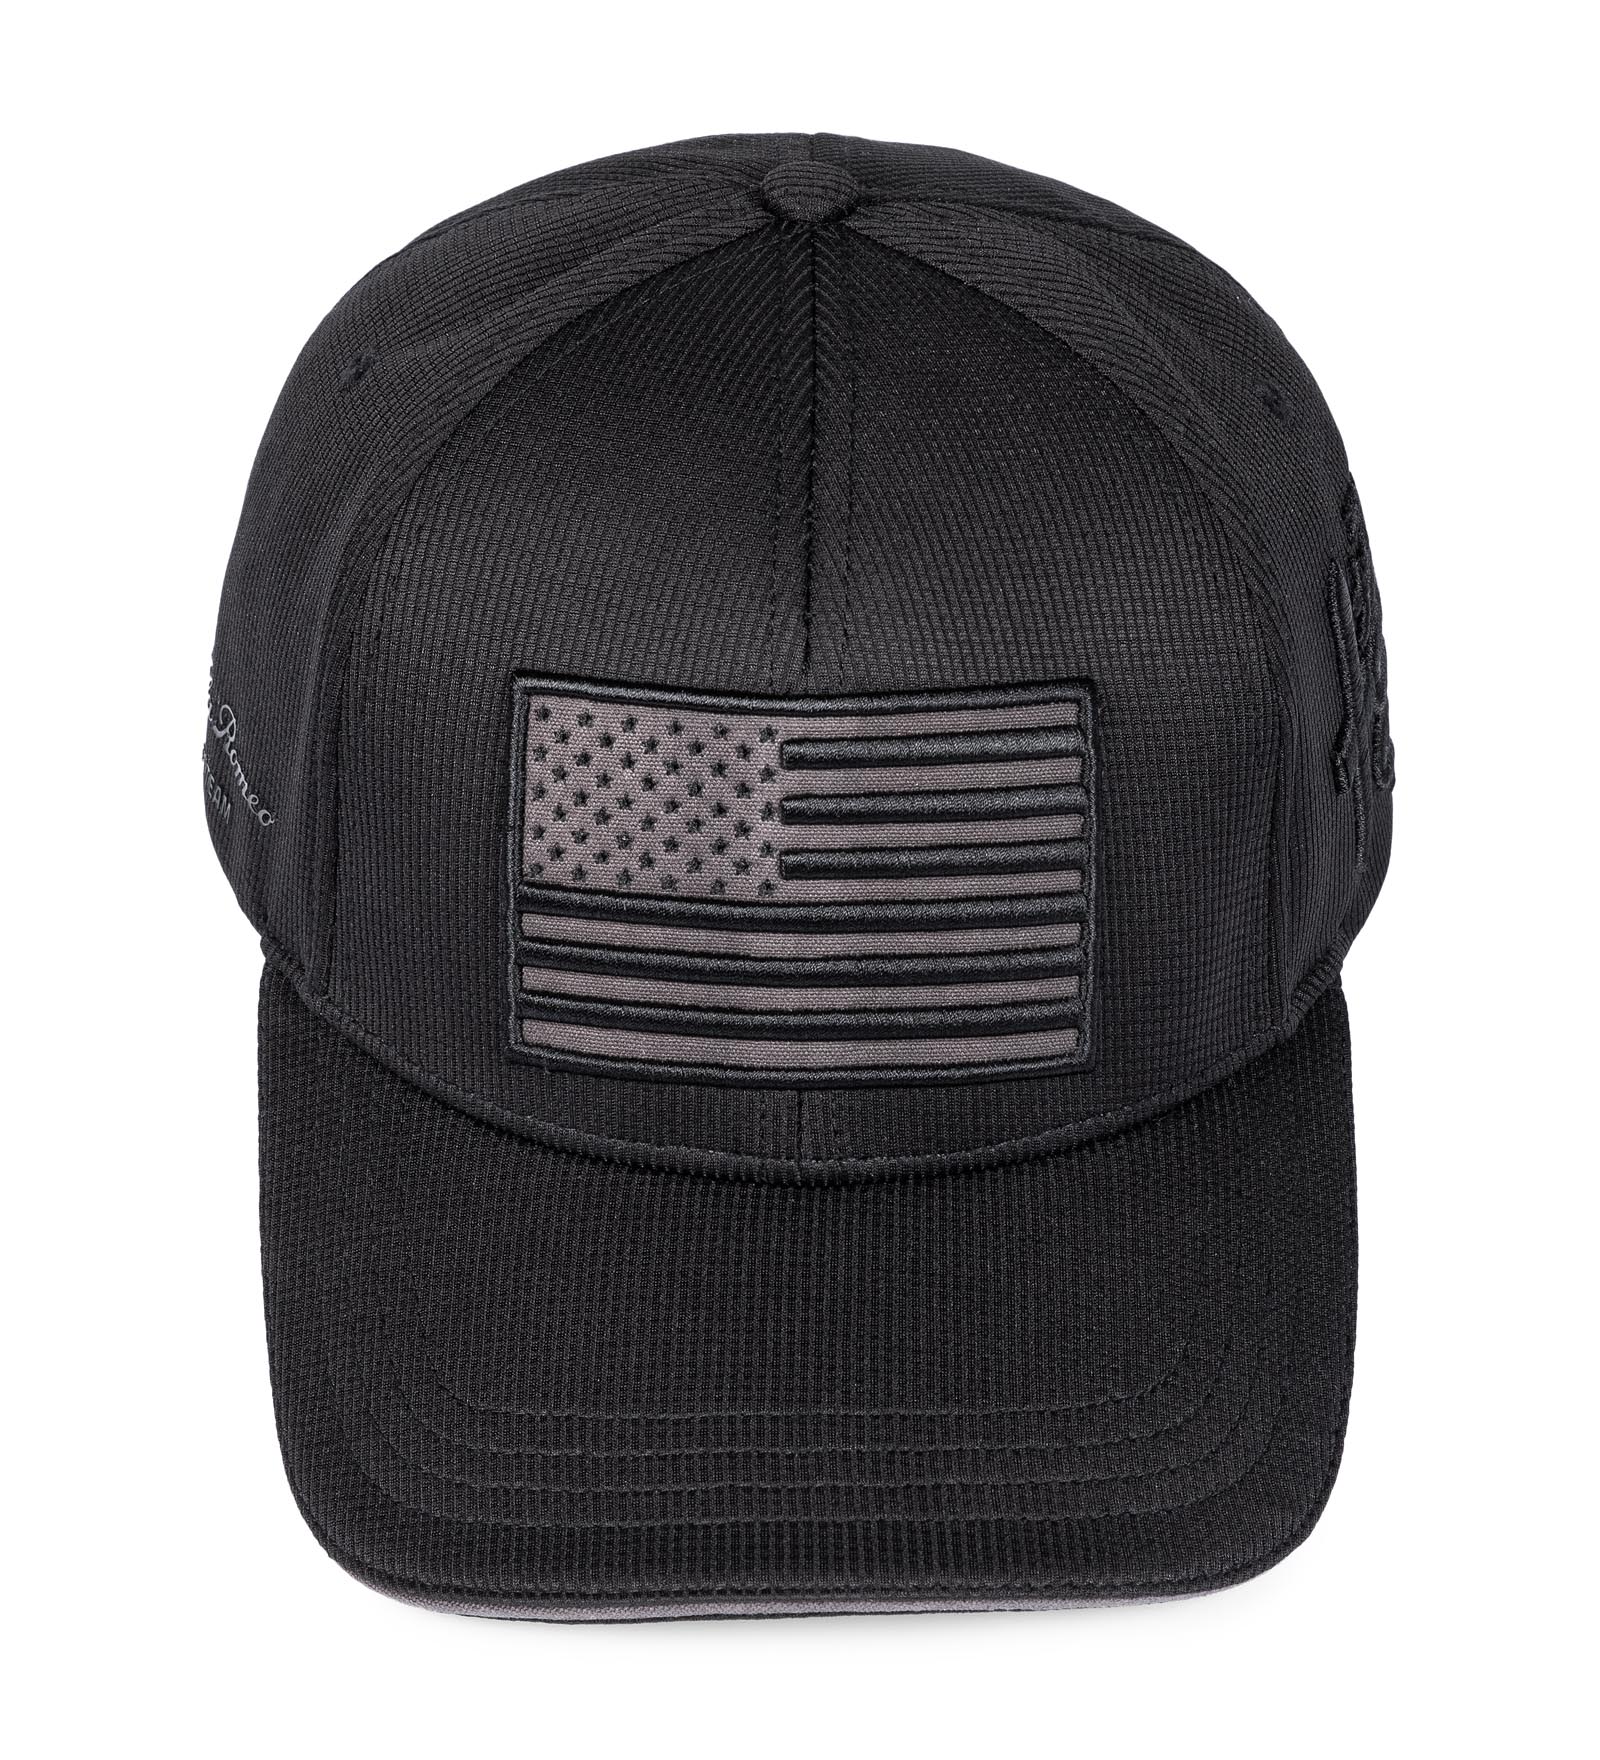 Cap USA Black Flag